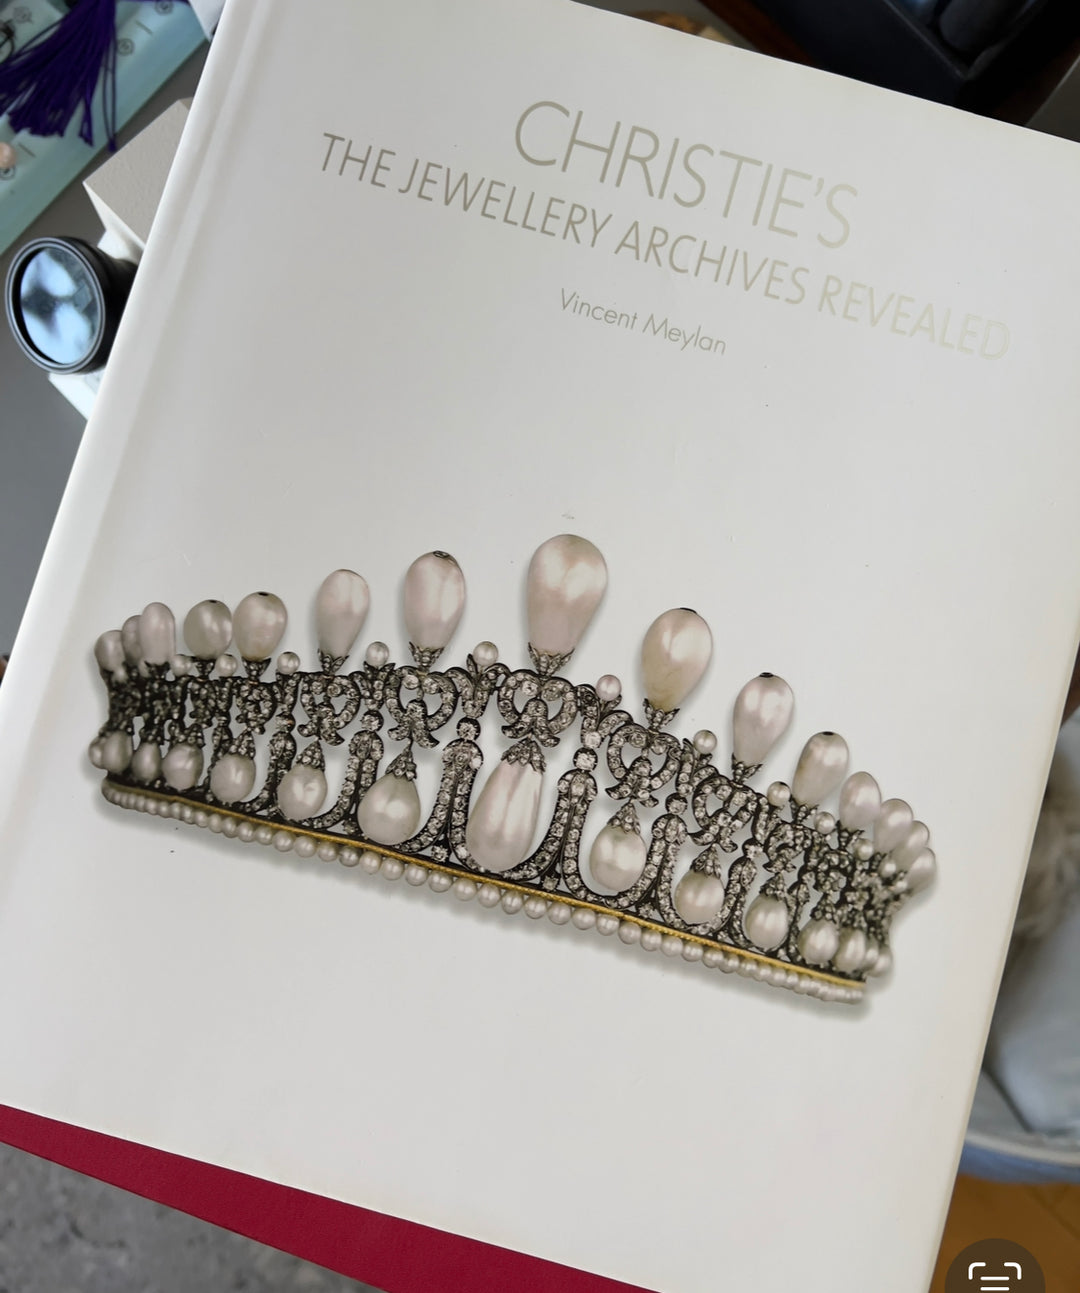 Christie’s The Jewellery Archives Revealed Hardback Book